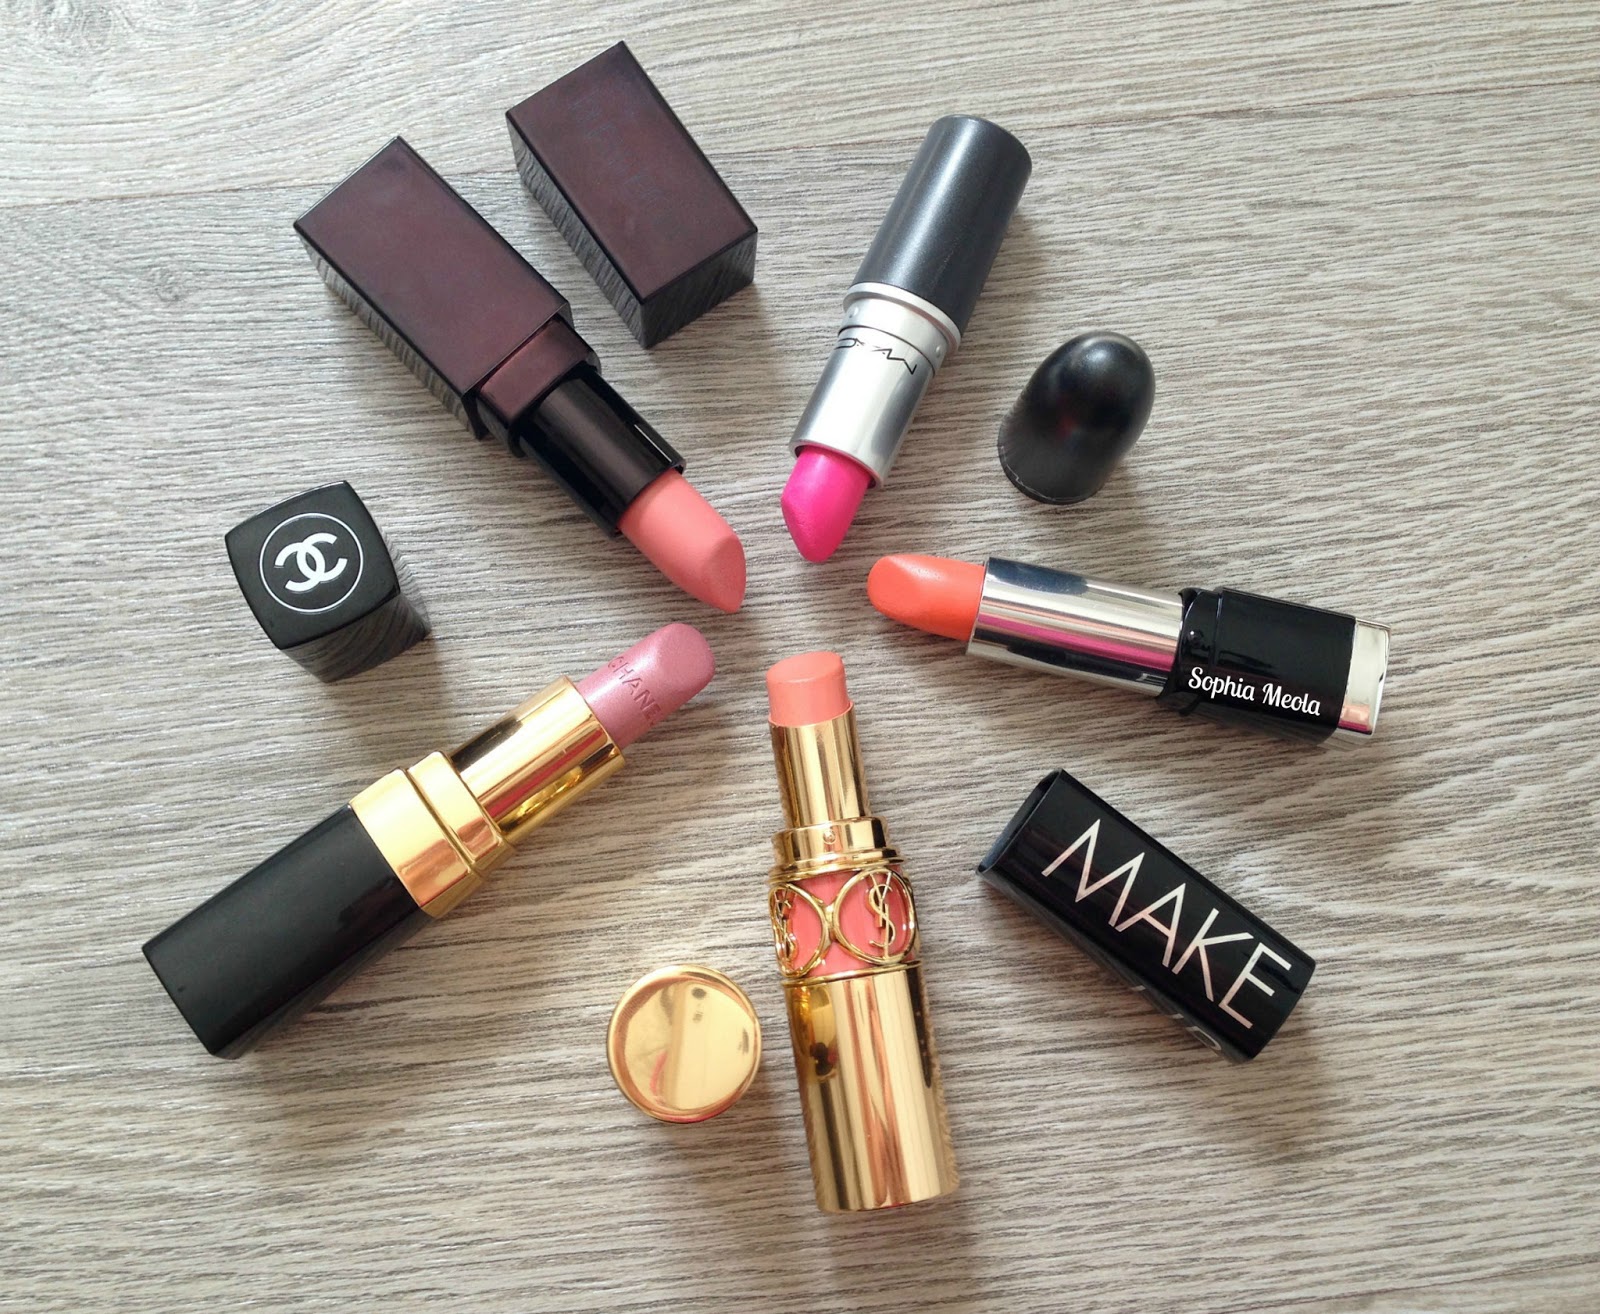 Top Lipsticks For Summer 2013 | Sophia Meola | A Beauty, Fashion ...